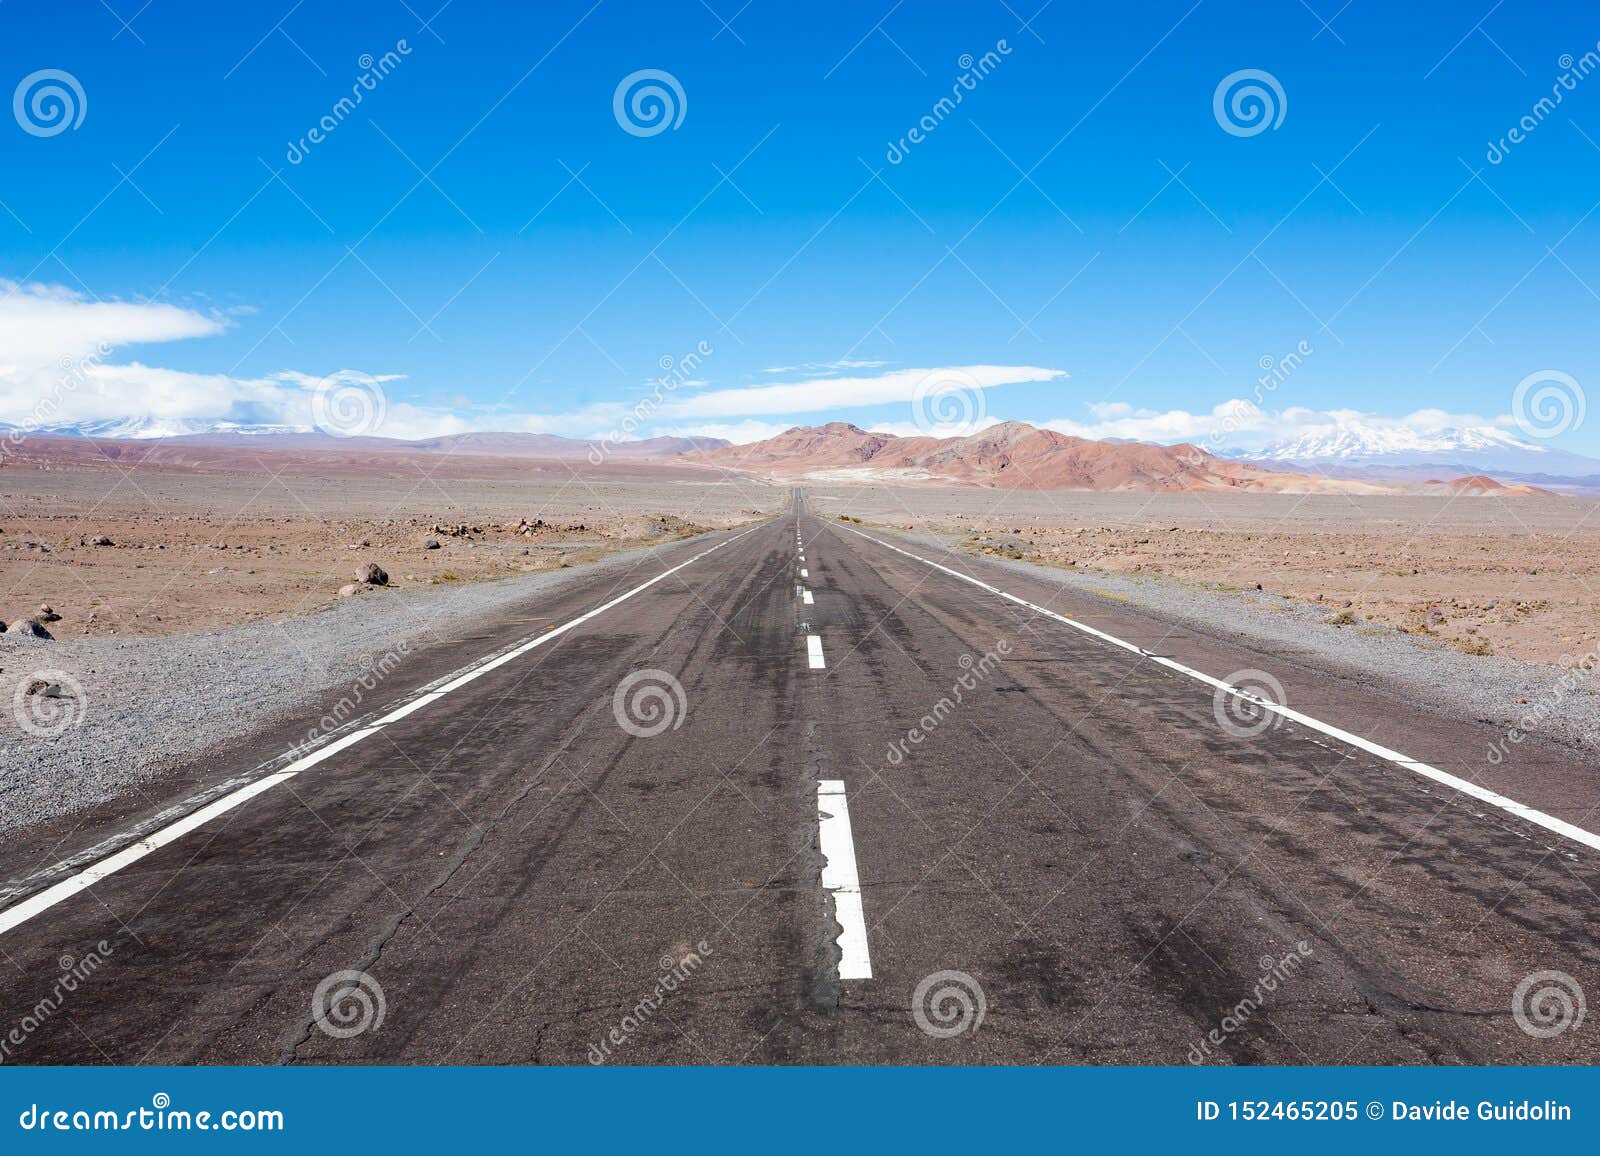 road to san pedro de atacama, chile landscape